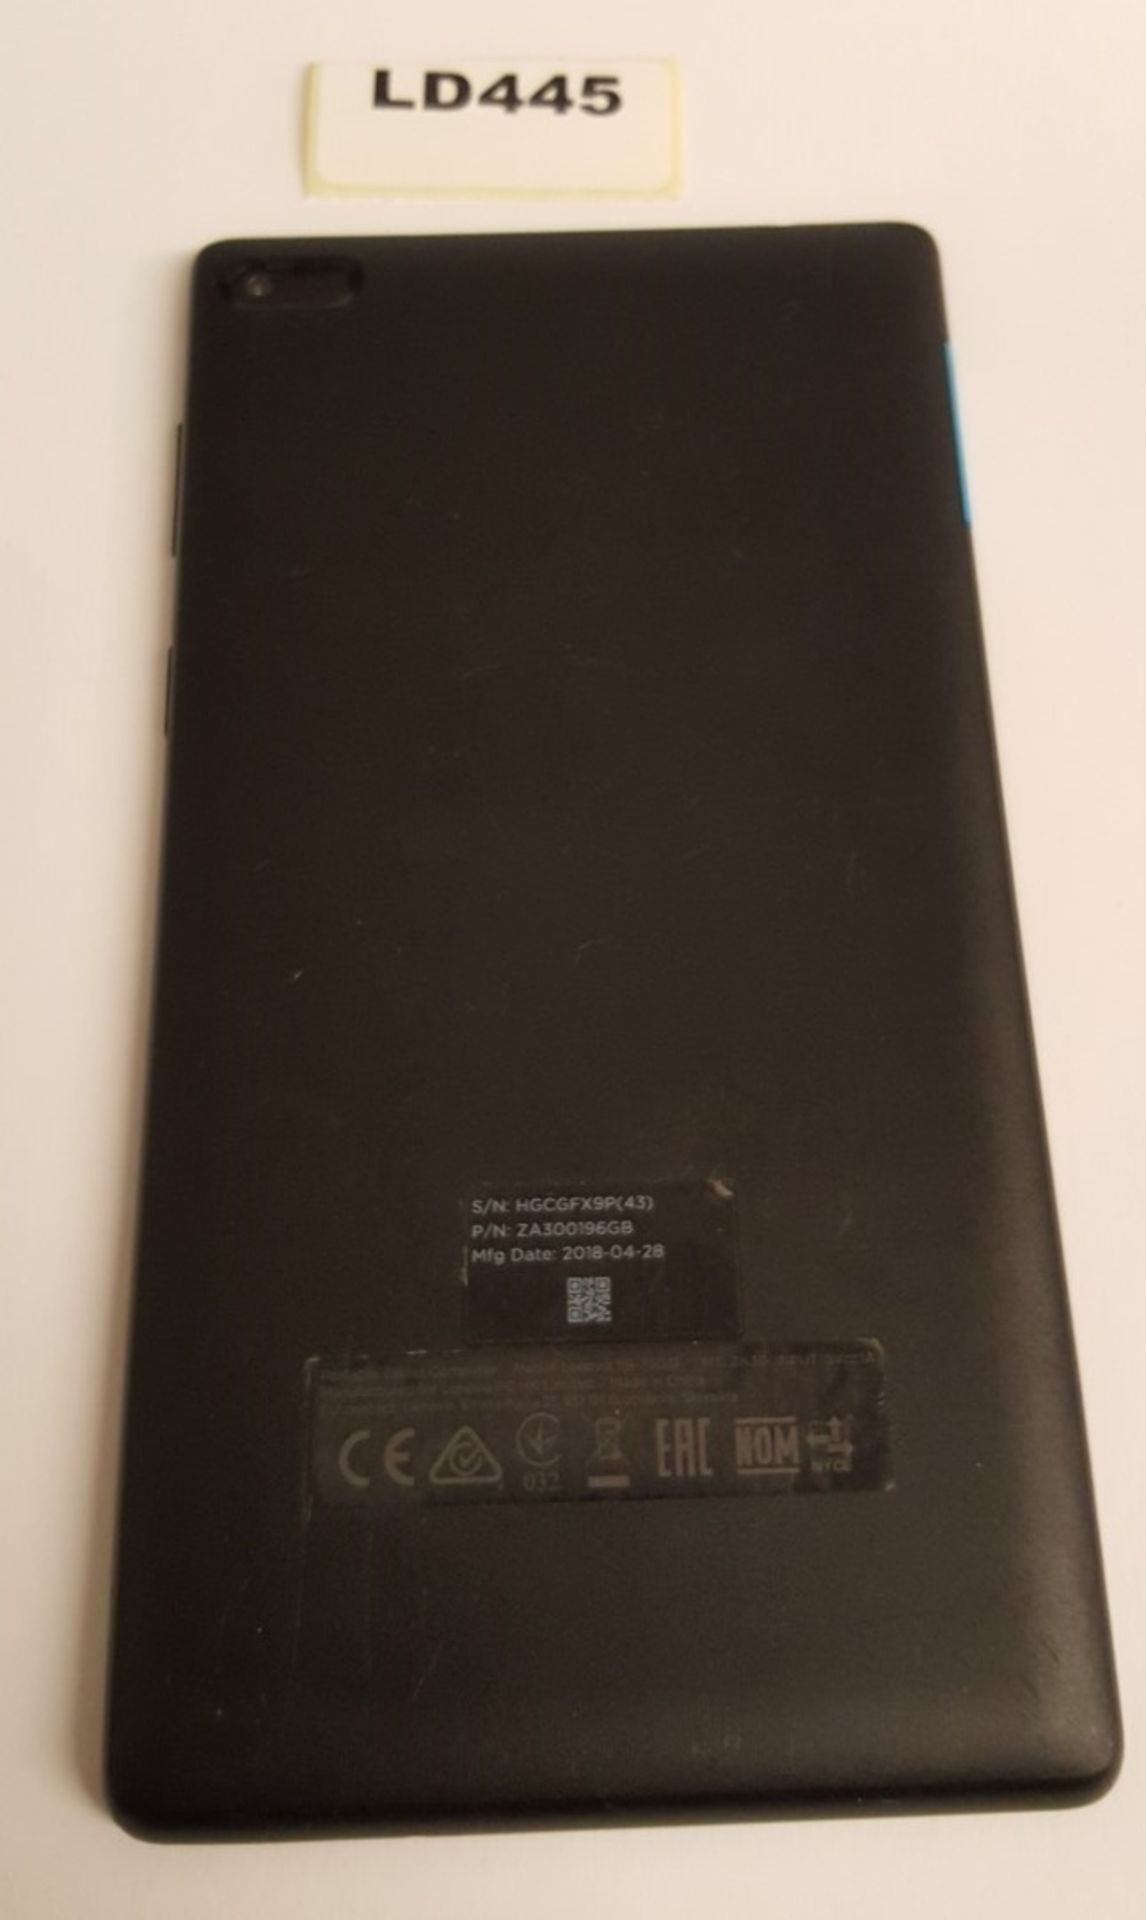 1 x Lenovo Tab 7 TB-7304F 7-inch Tablet Quad Core Processor, 1GB RAM, 16GB Storage - LD445 BR - Image 3 of 4